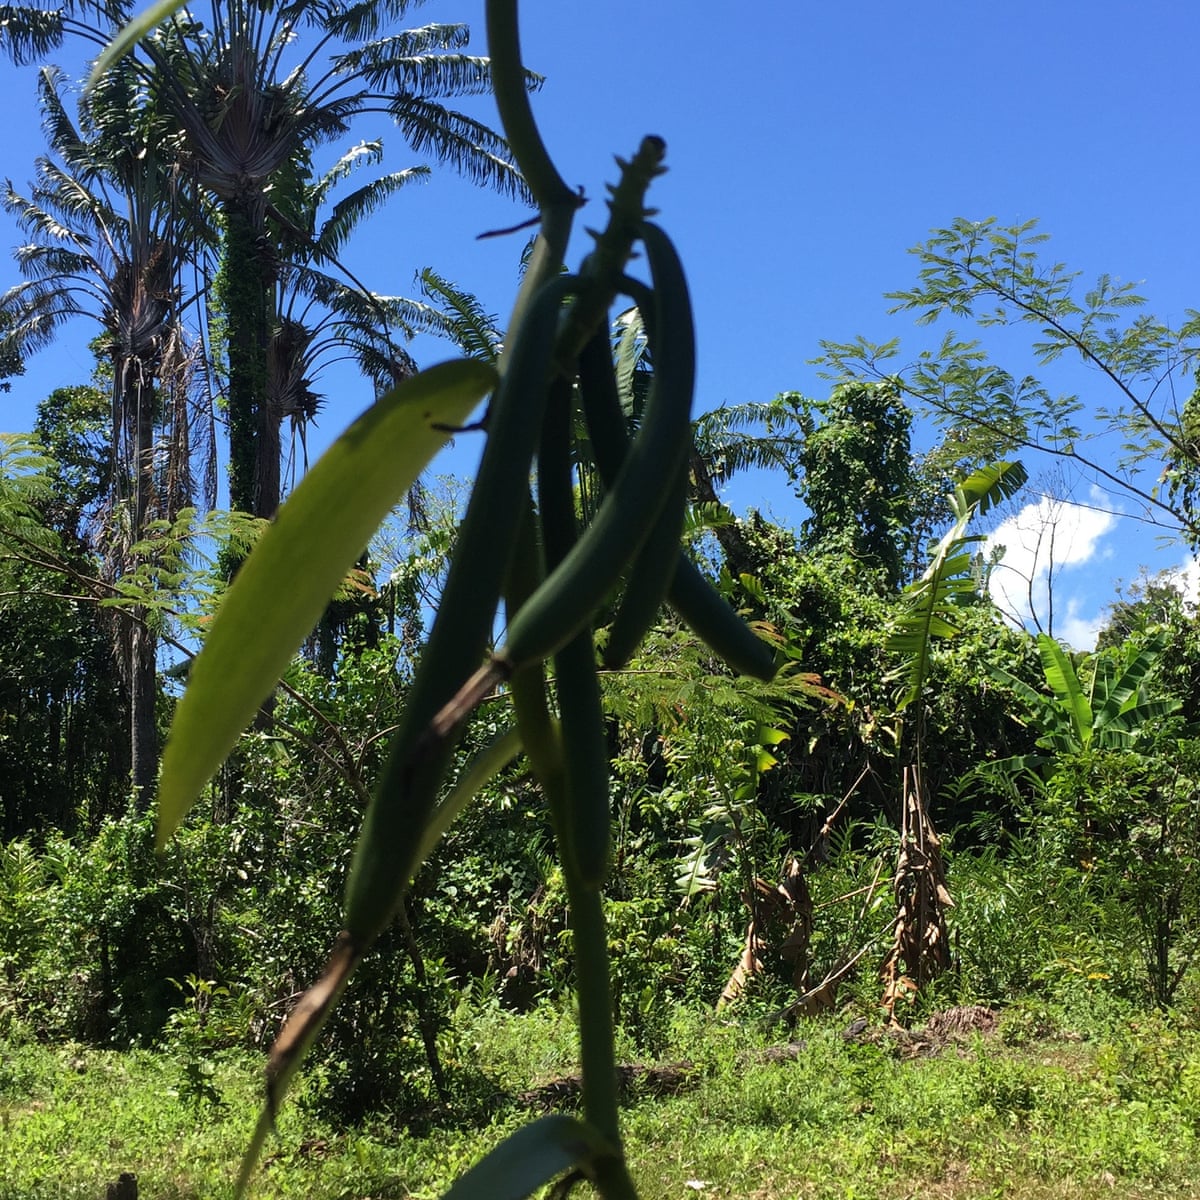 Madagascar's vanilla wars: prized spice drives death and deforestation, Deforestation